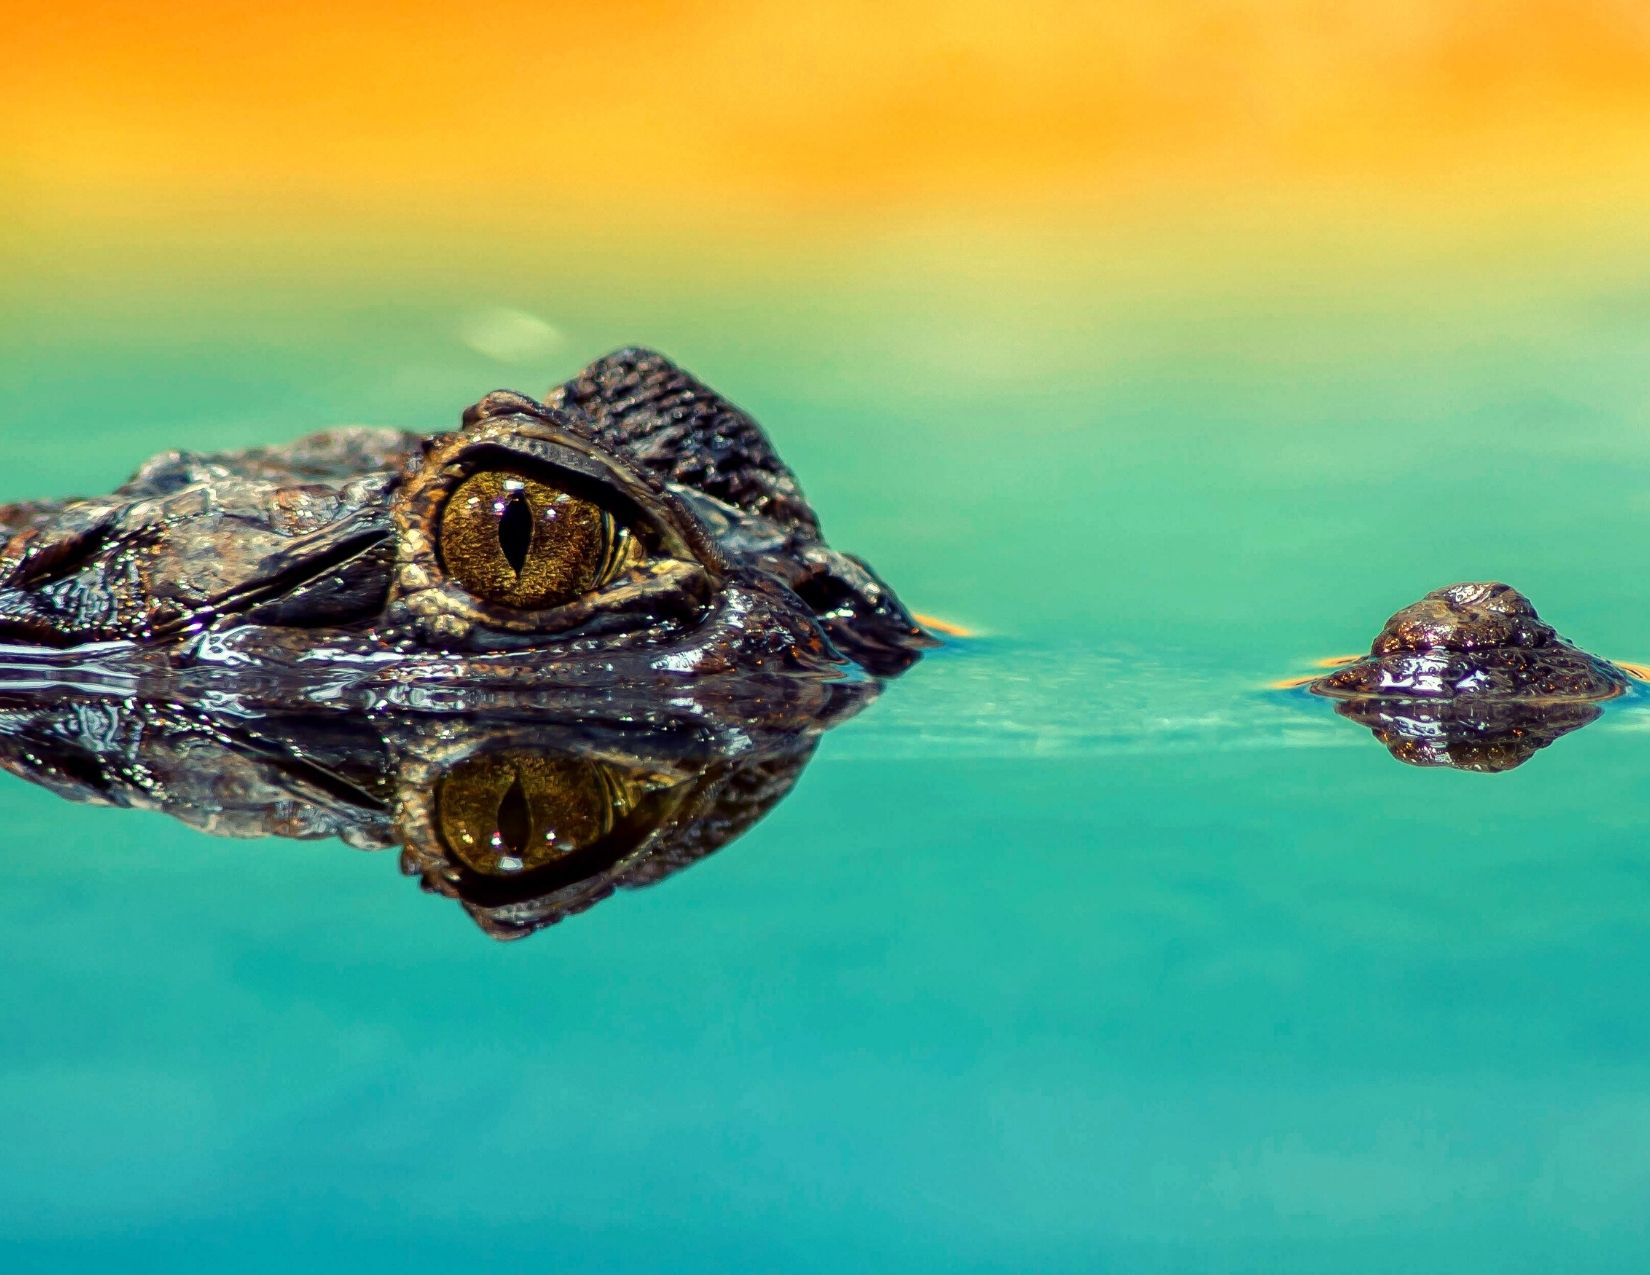 Alligator in water